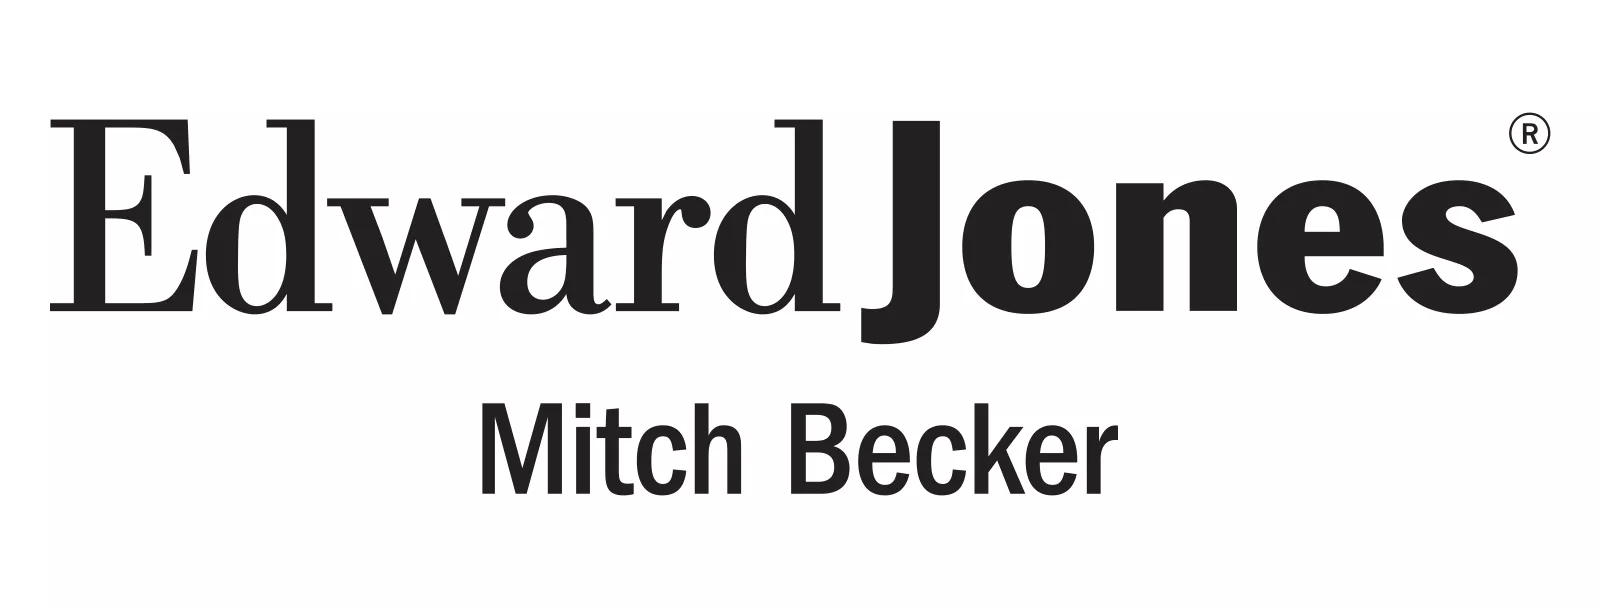 Edward Jones Mitch Becker logo